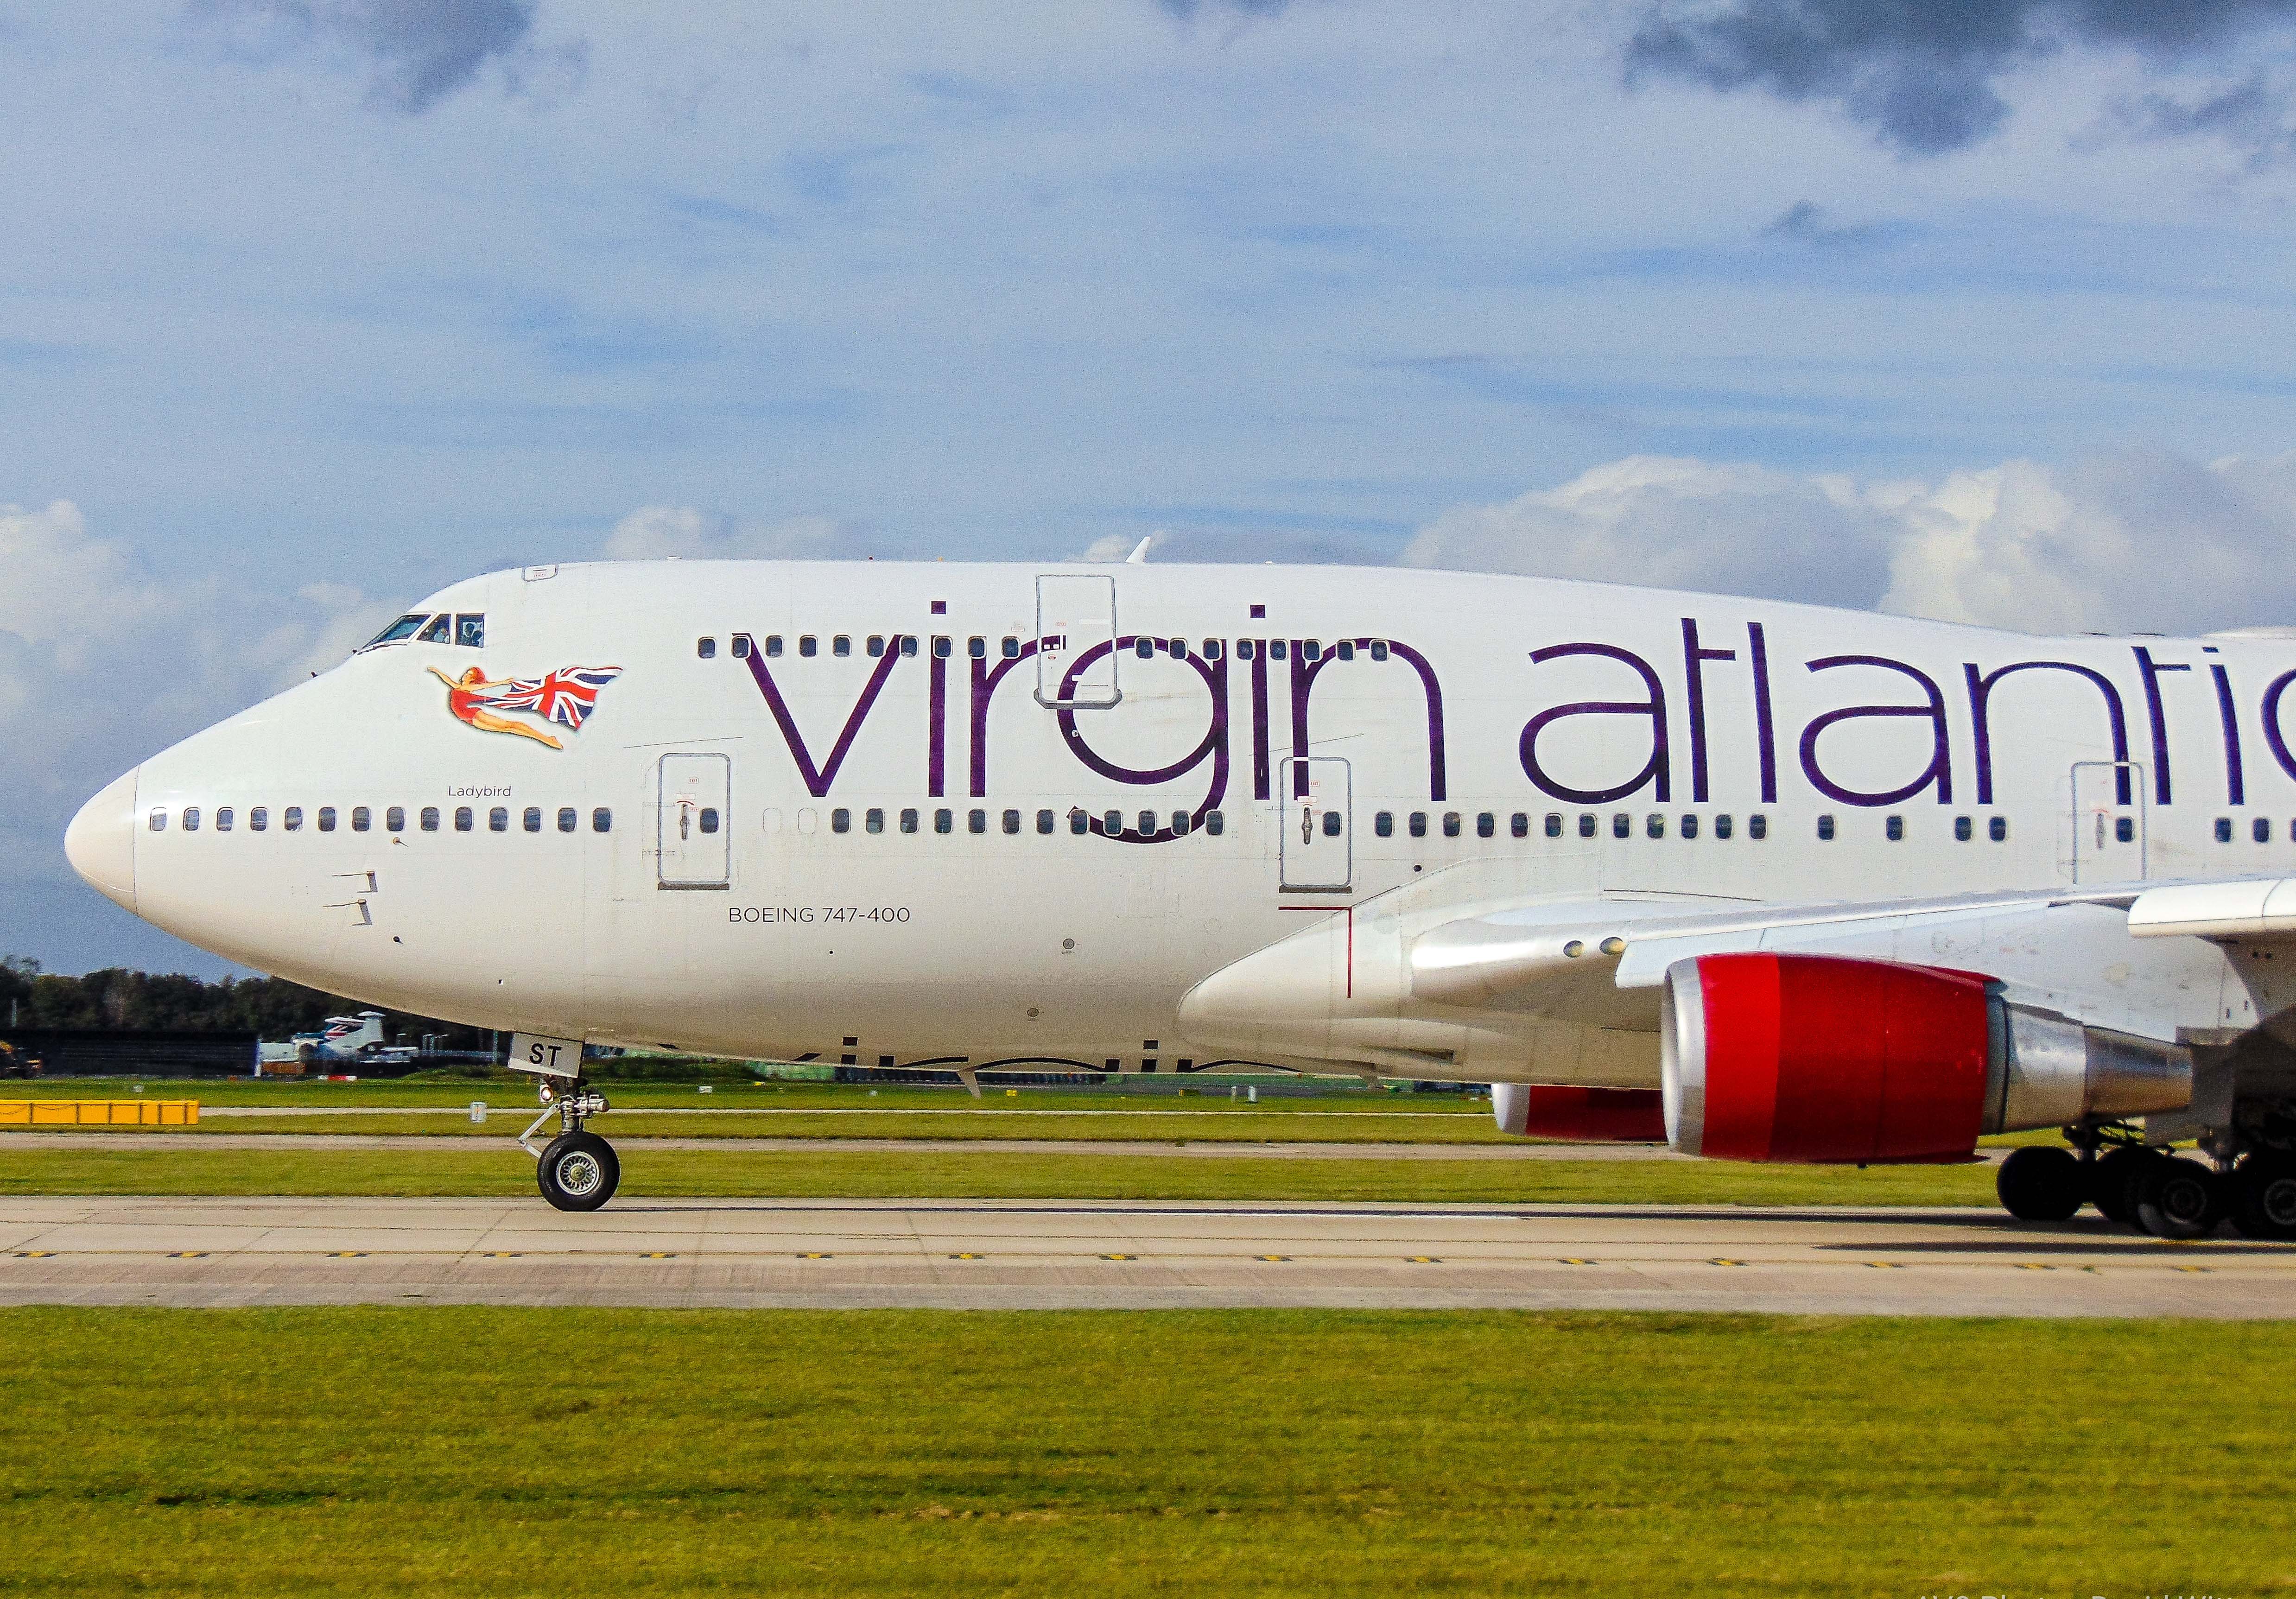 G-VAST/GVAST Virgin Atlantic Airways Boeing 747 Airframe Information - AVSpotters.com